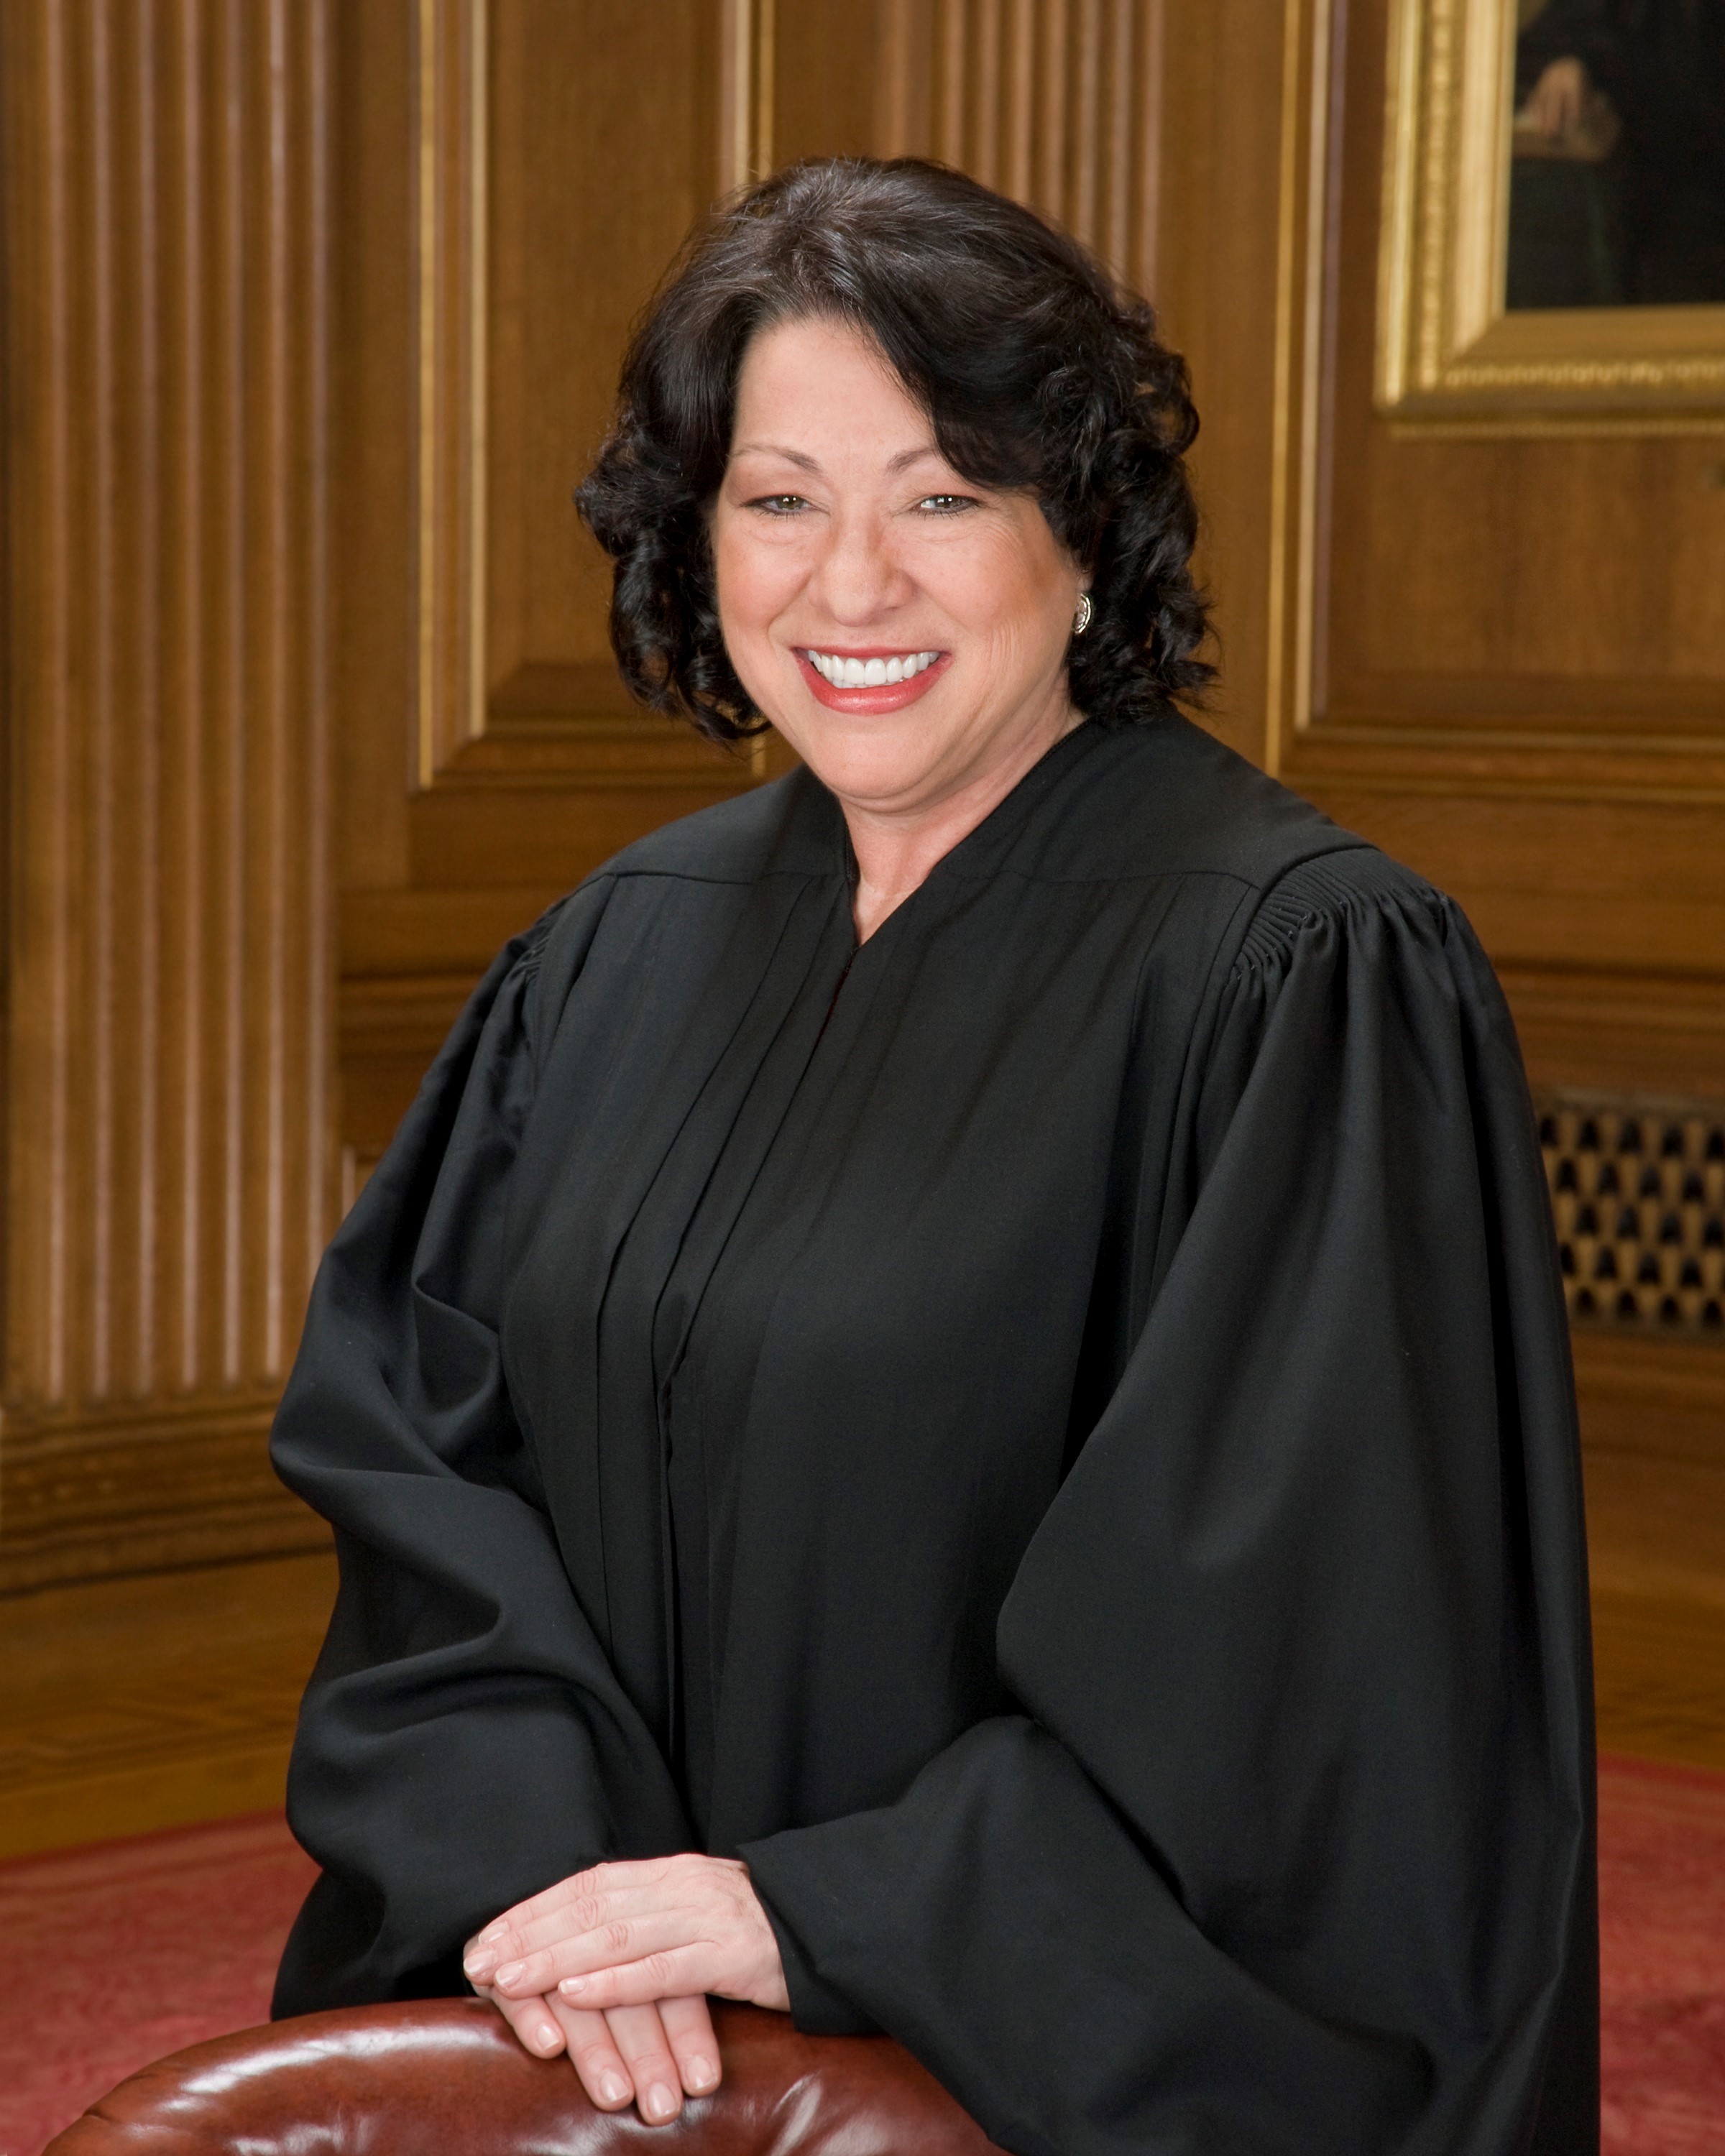 Associate Justice Sotomayor